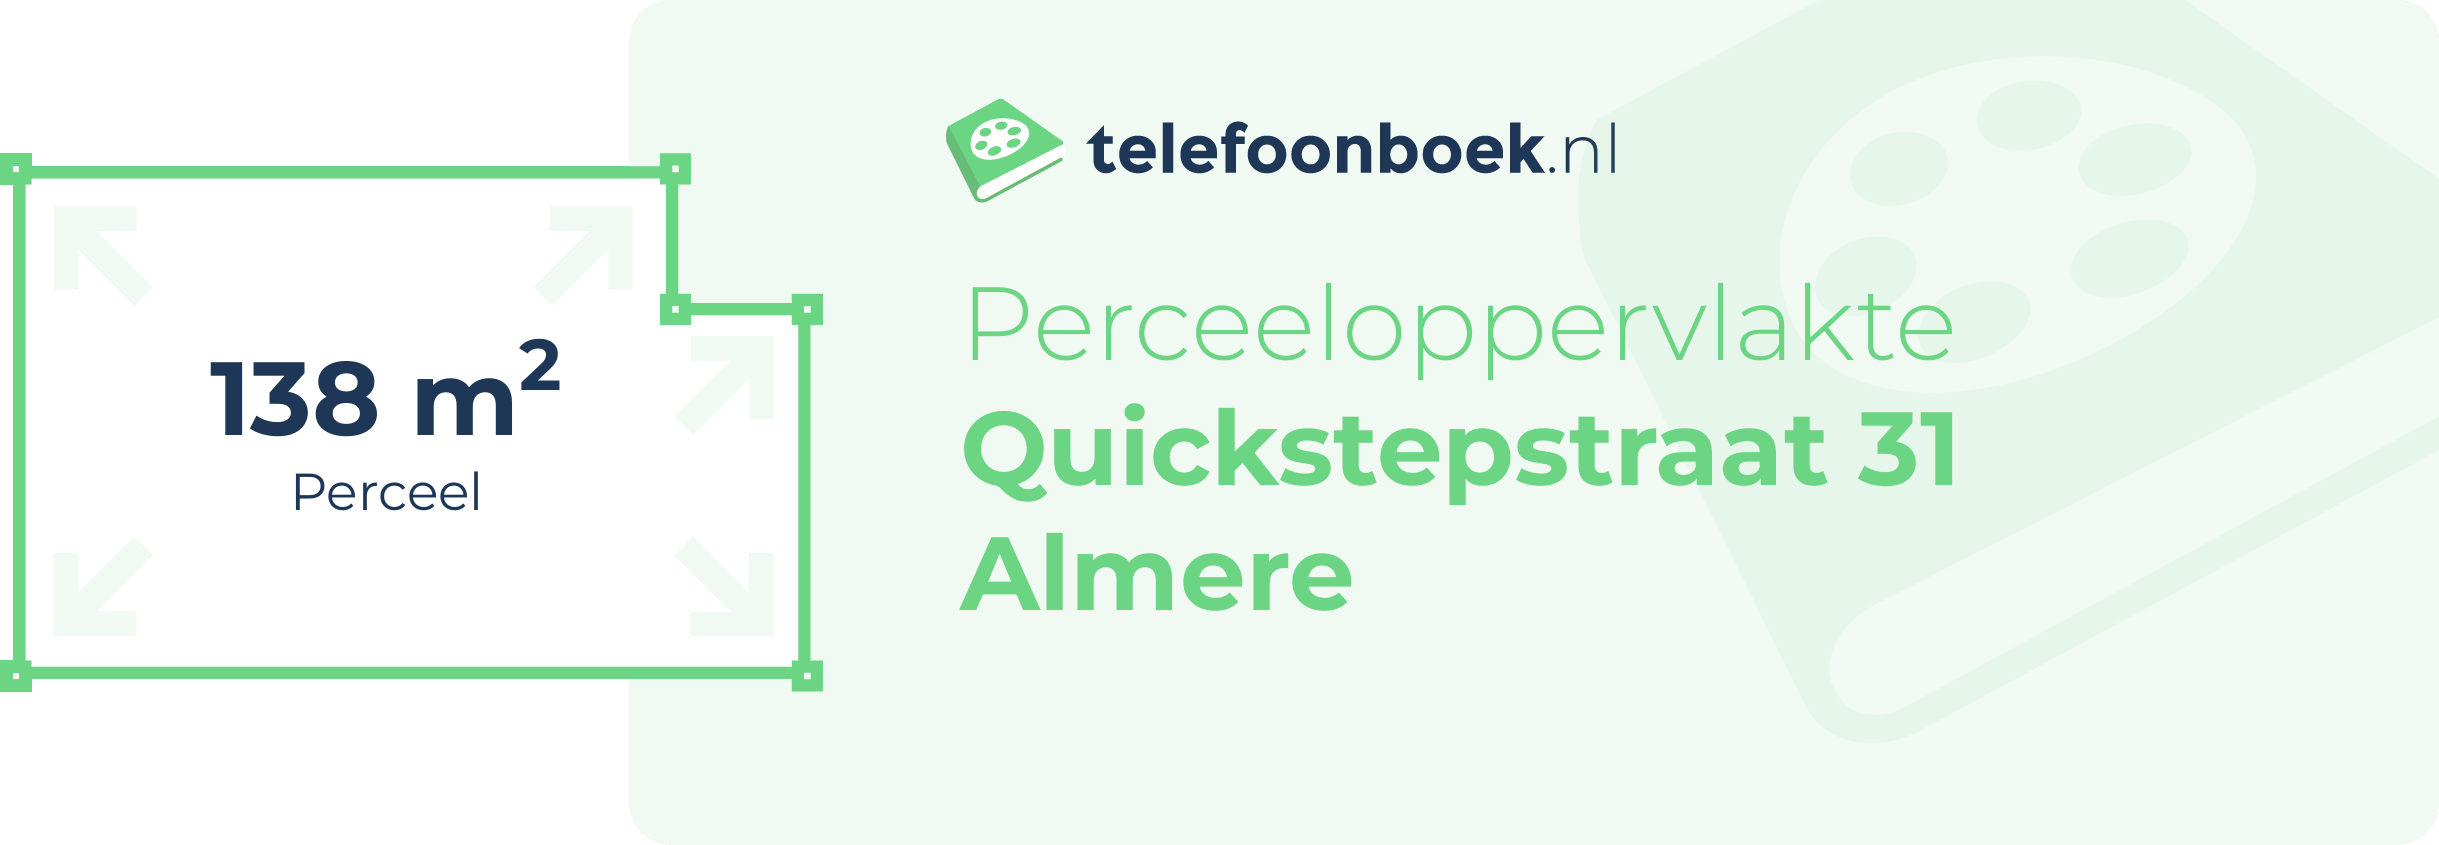 Perceeloppervlakte Quickstepstraat 31 Almere